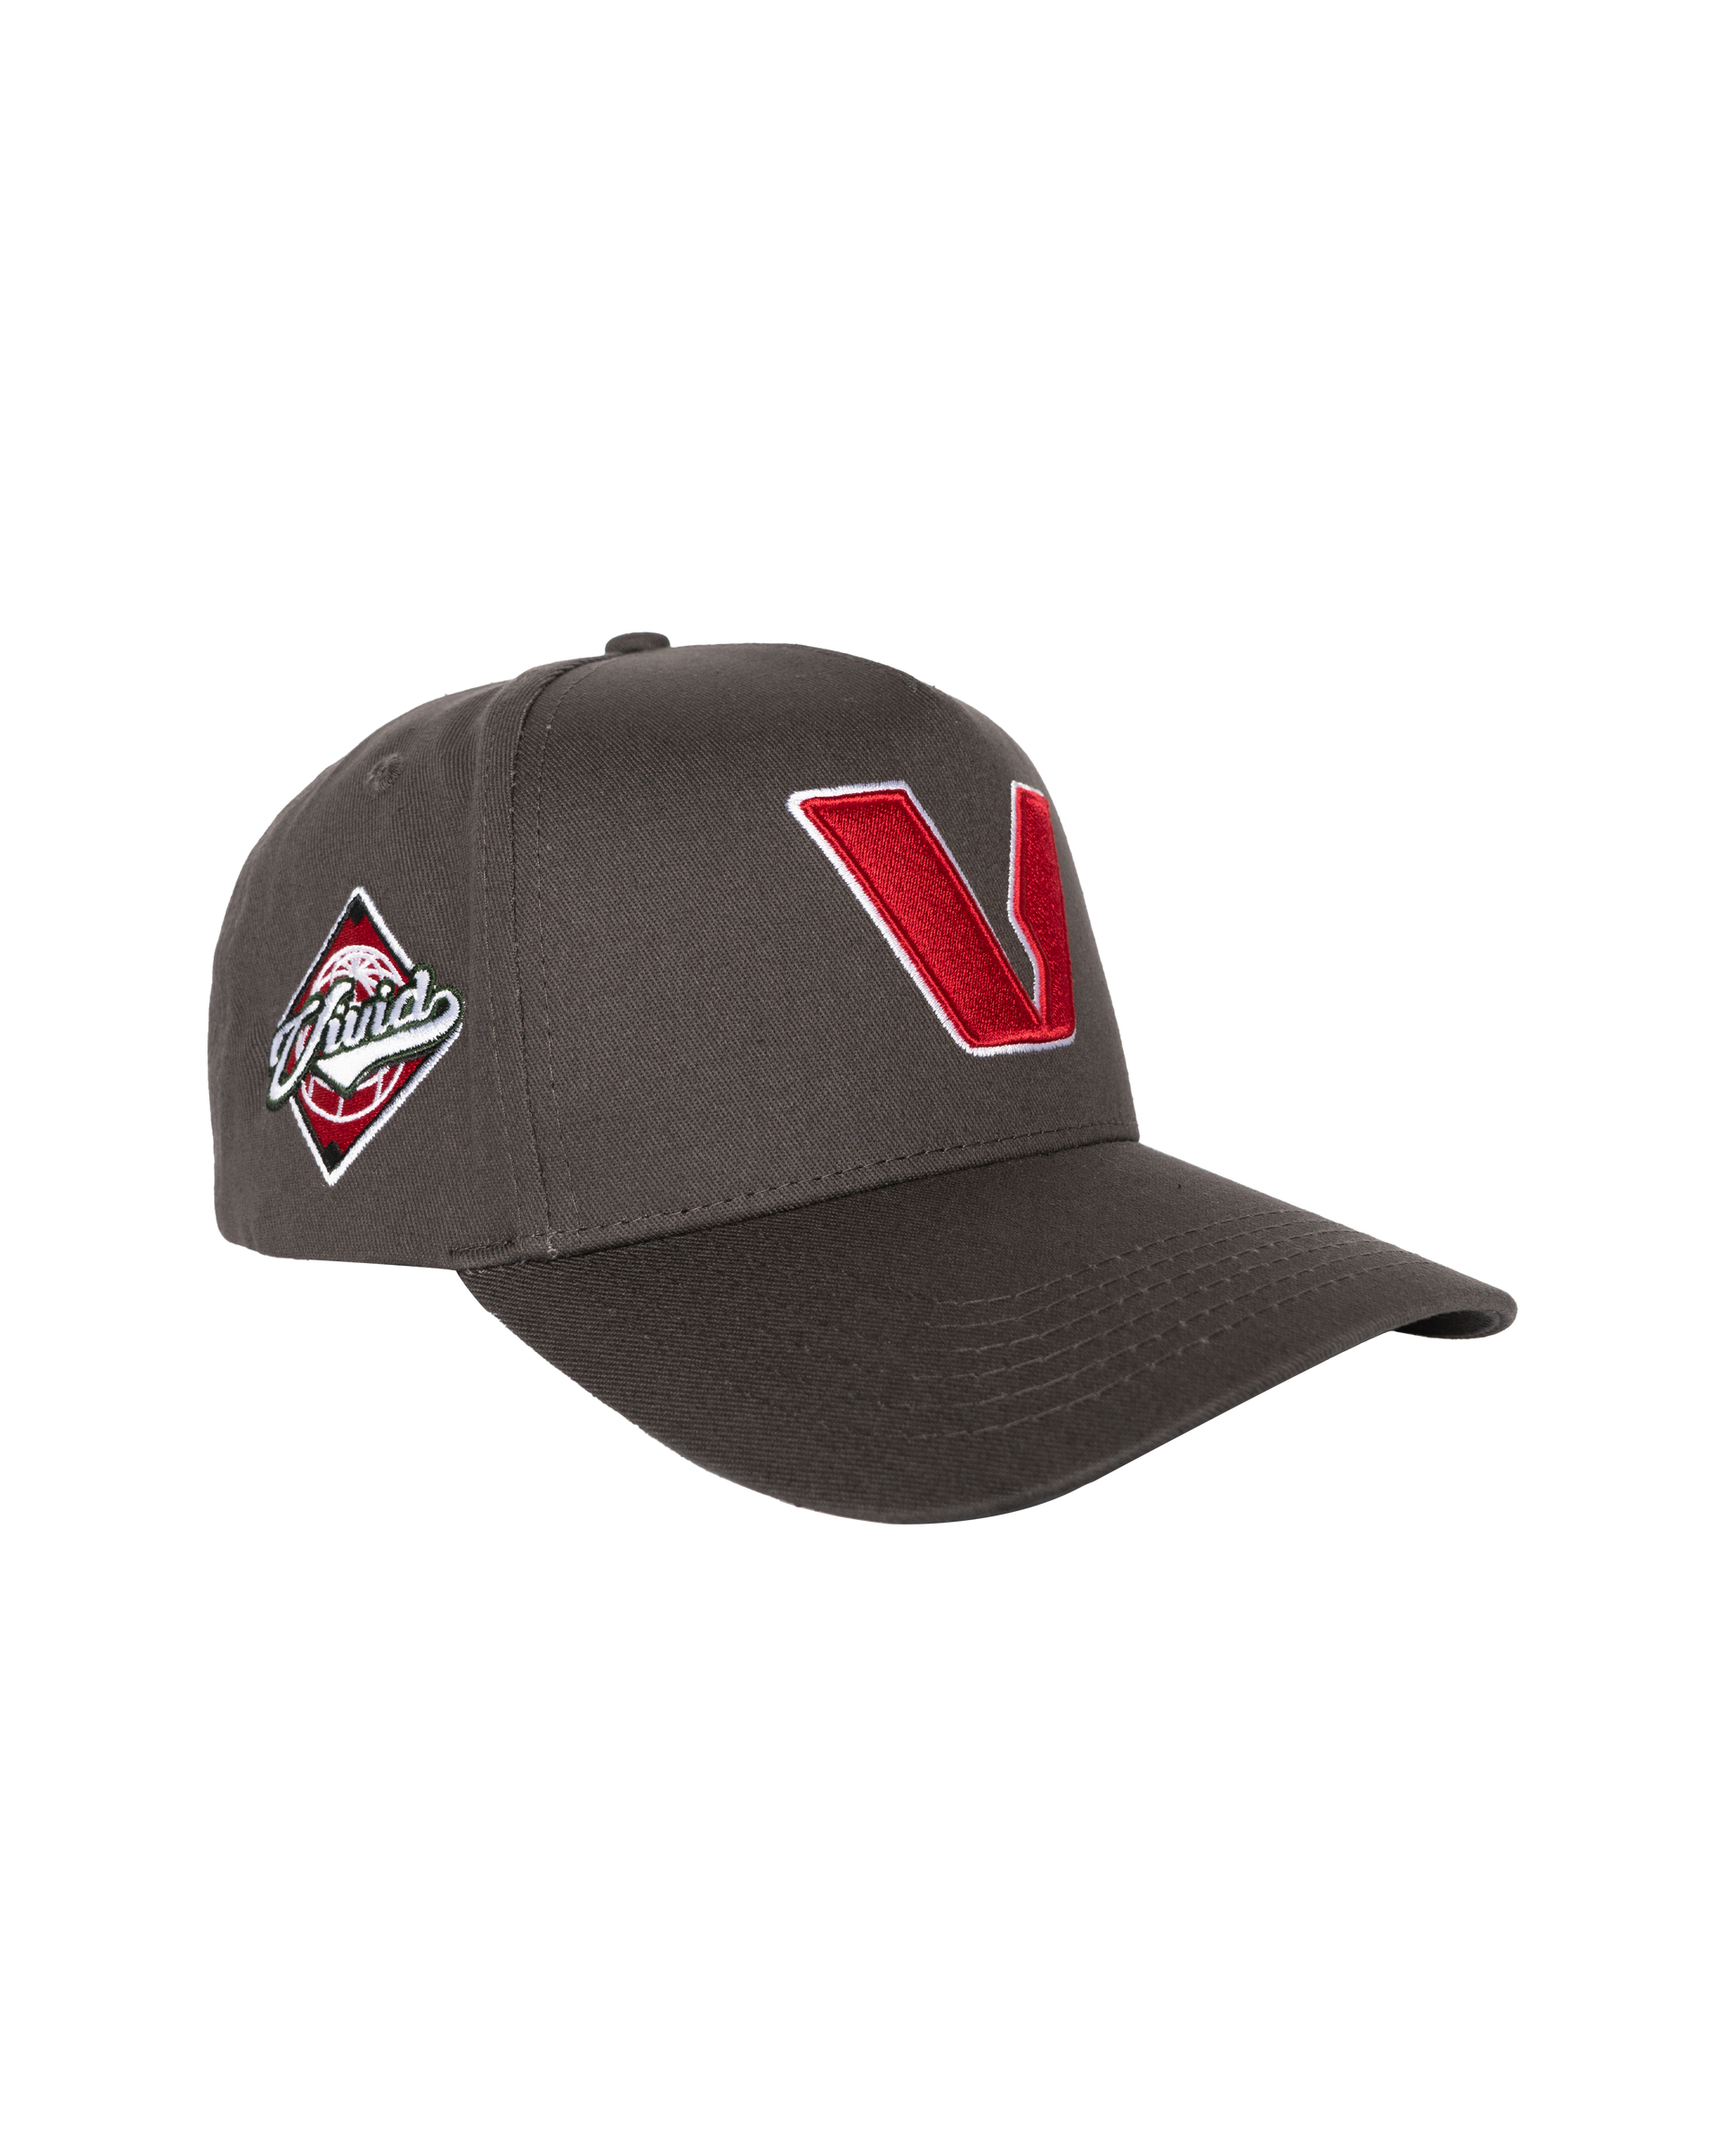 Big "V" Hat